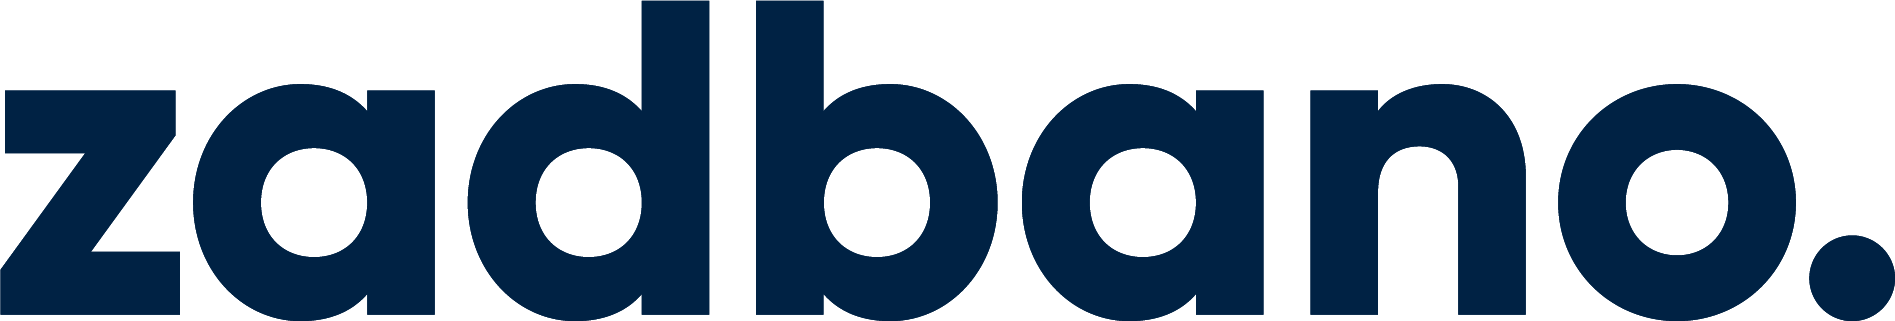 logo-zadbano-navy-blue(3).png